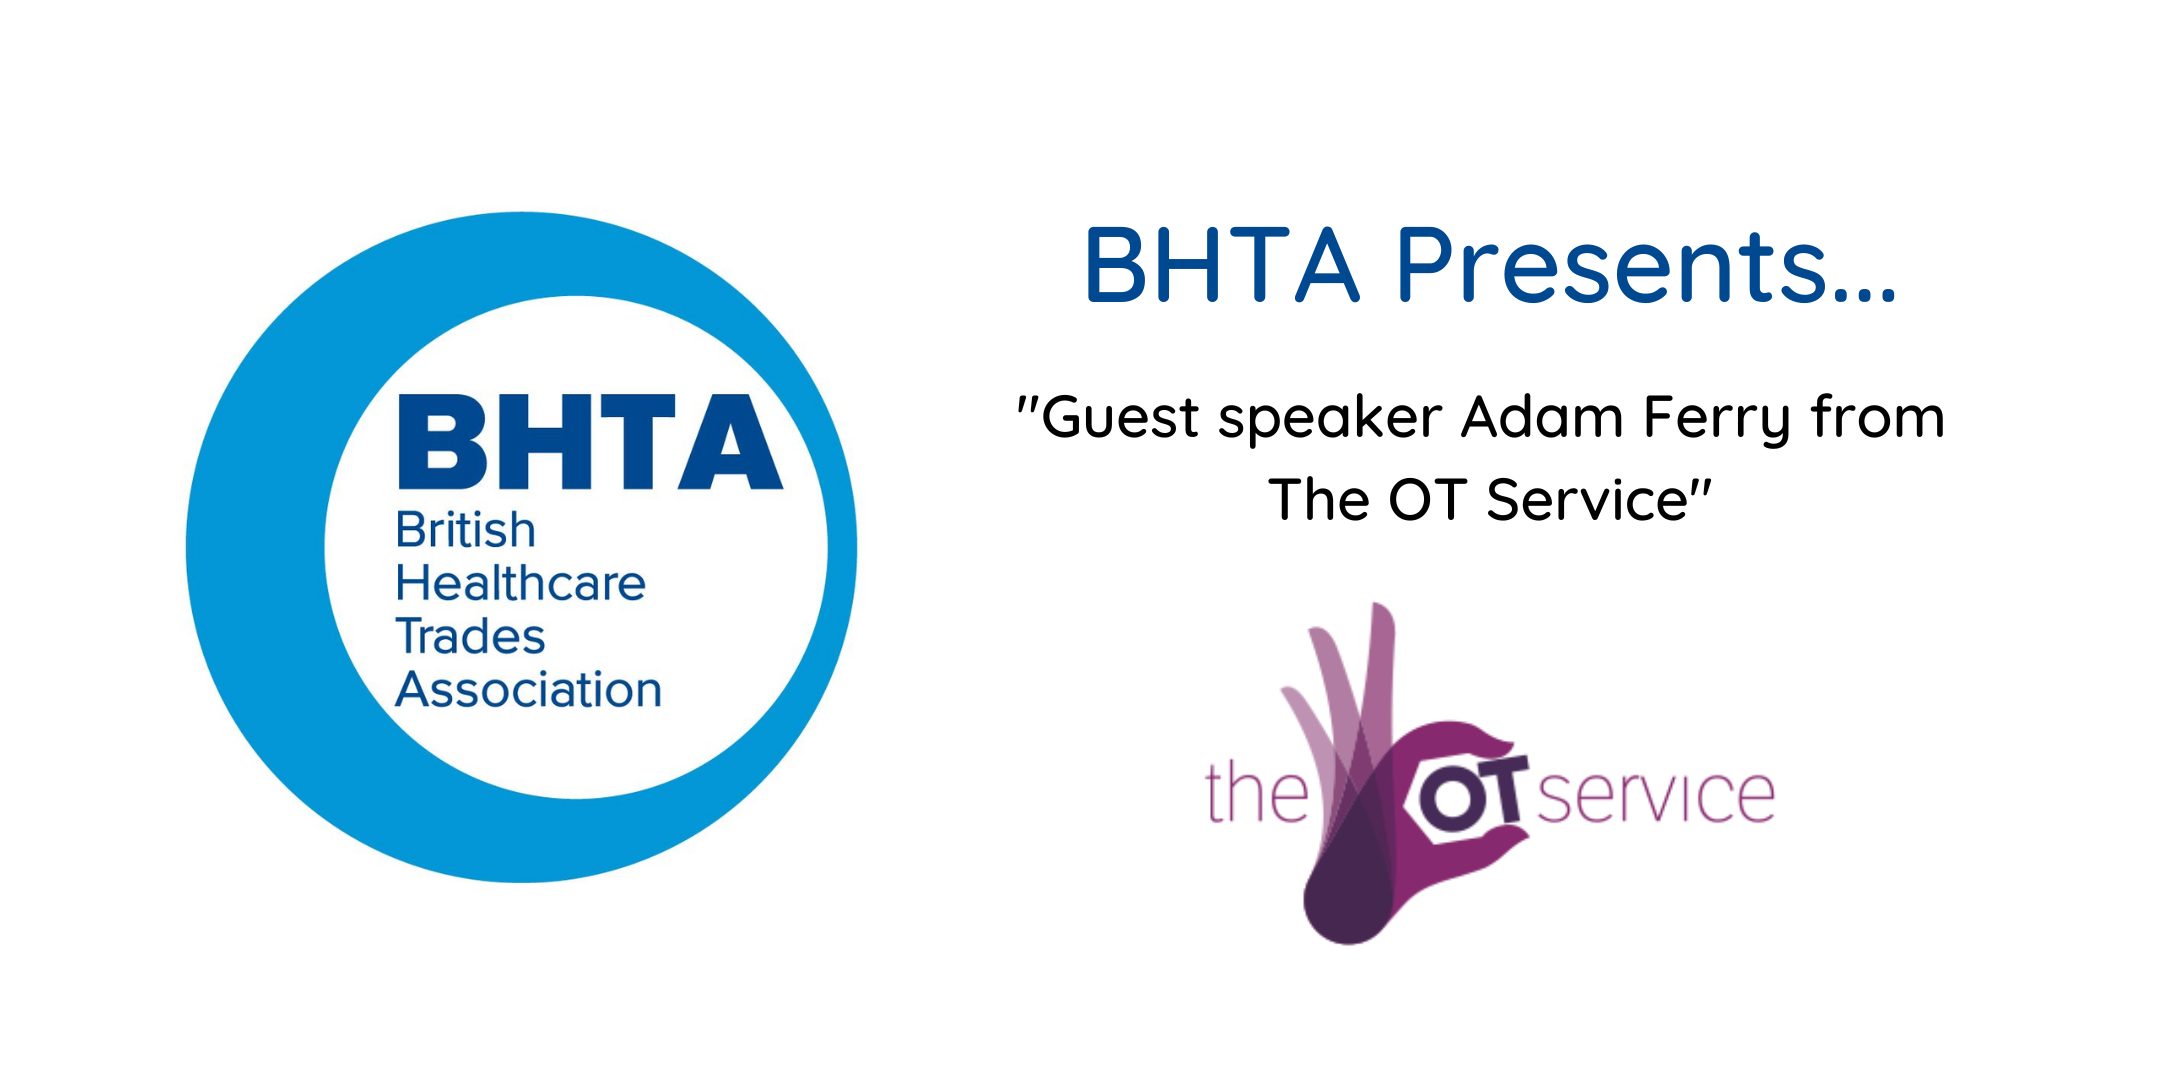 BHTA presents… “The OT Service”